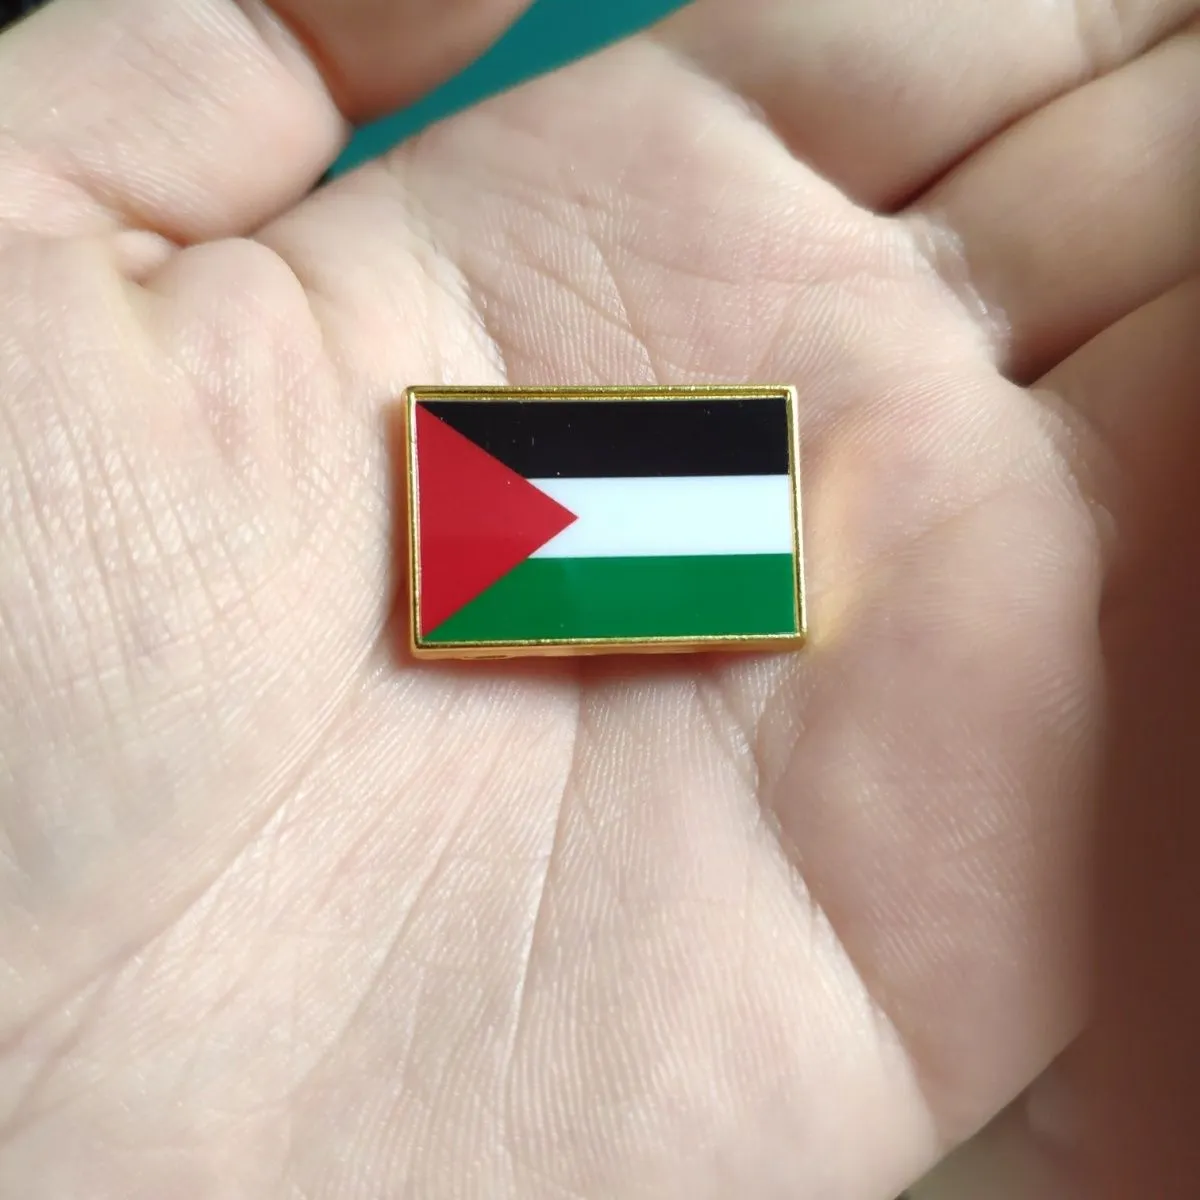 Palestine Flag Lapel Pins Palestine National Flag Lapel Pins